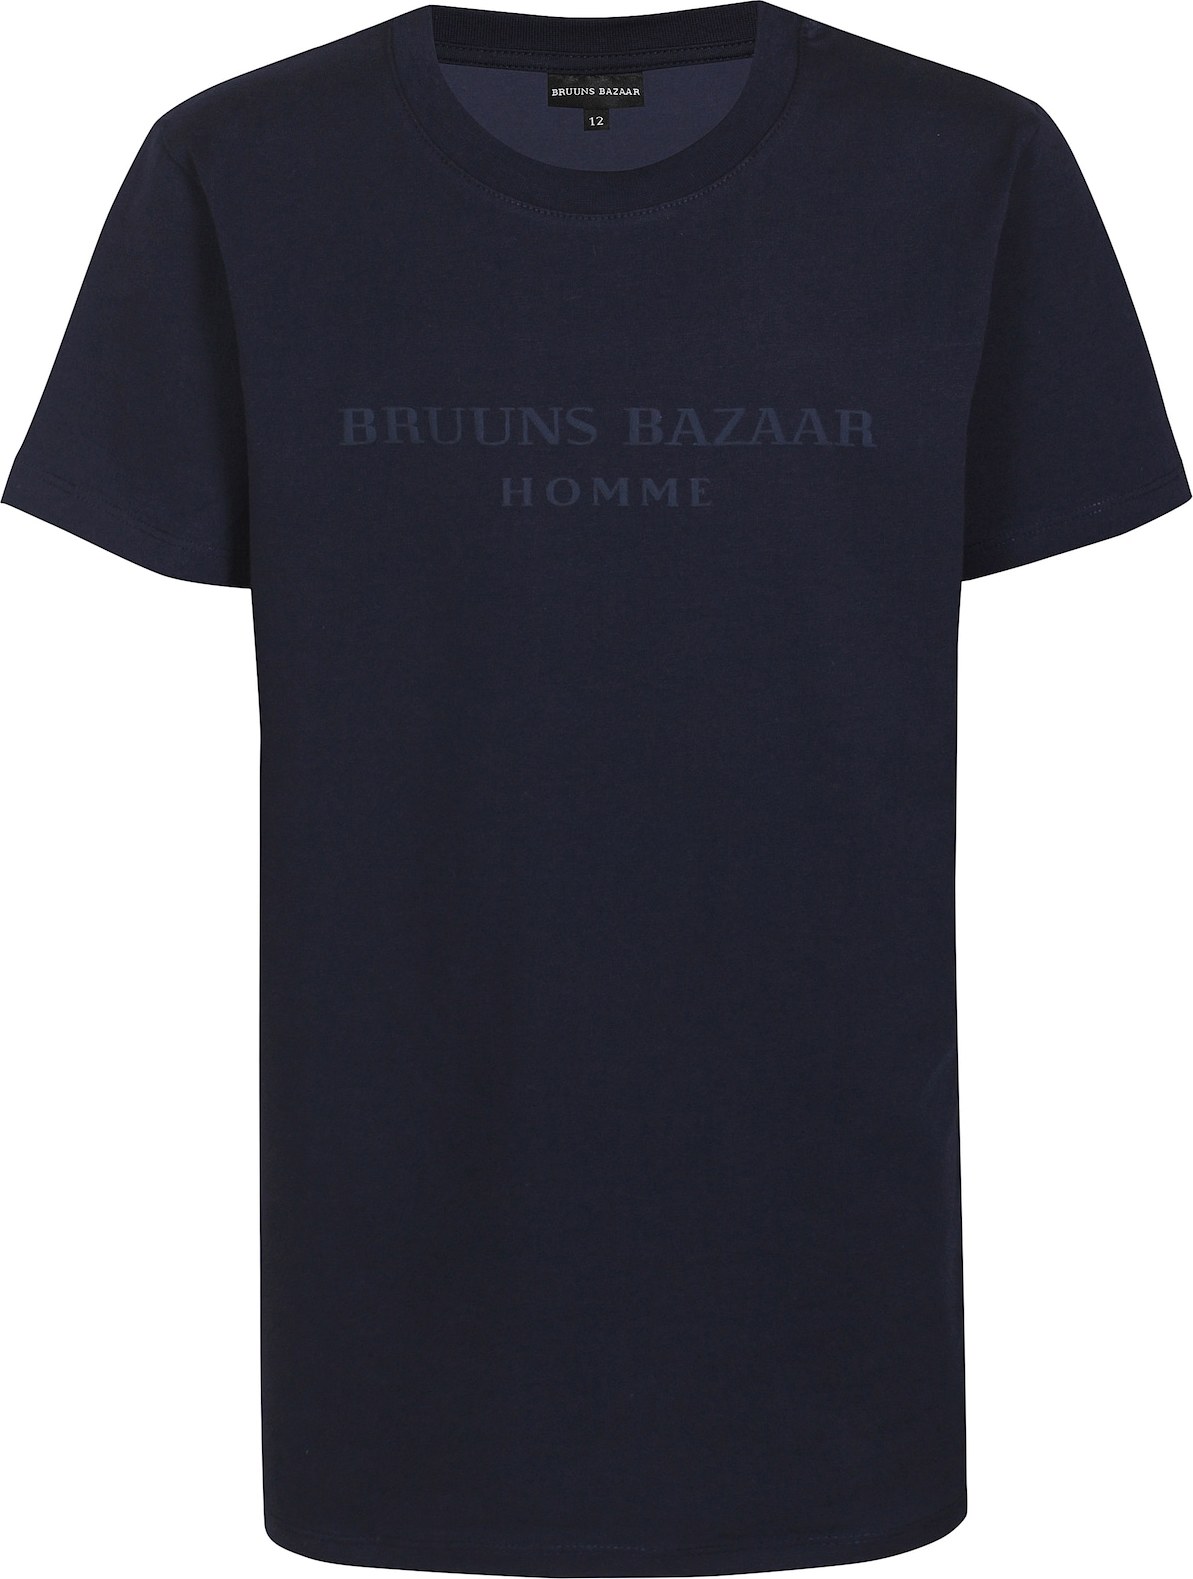 Bruuns Bazaar Kids Tričko námořnická modř